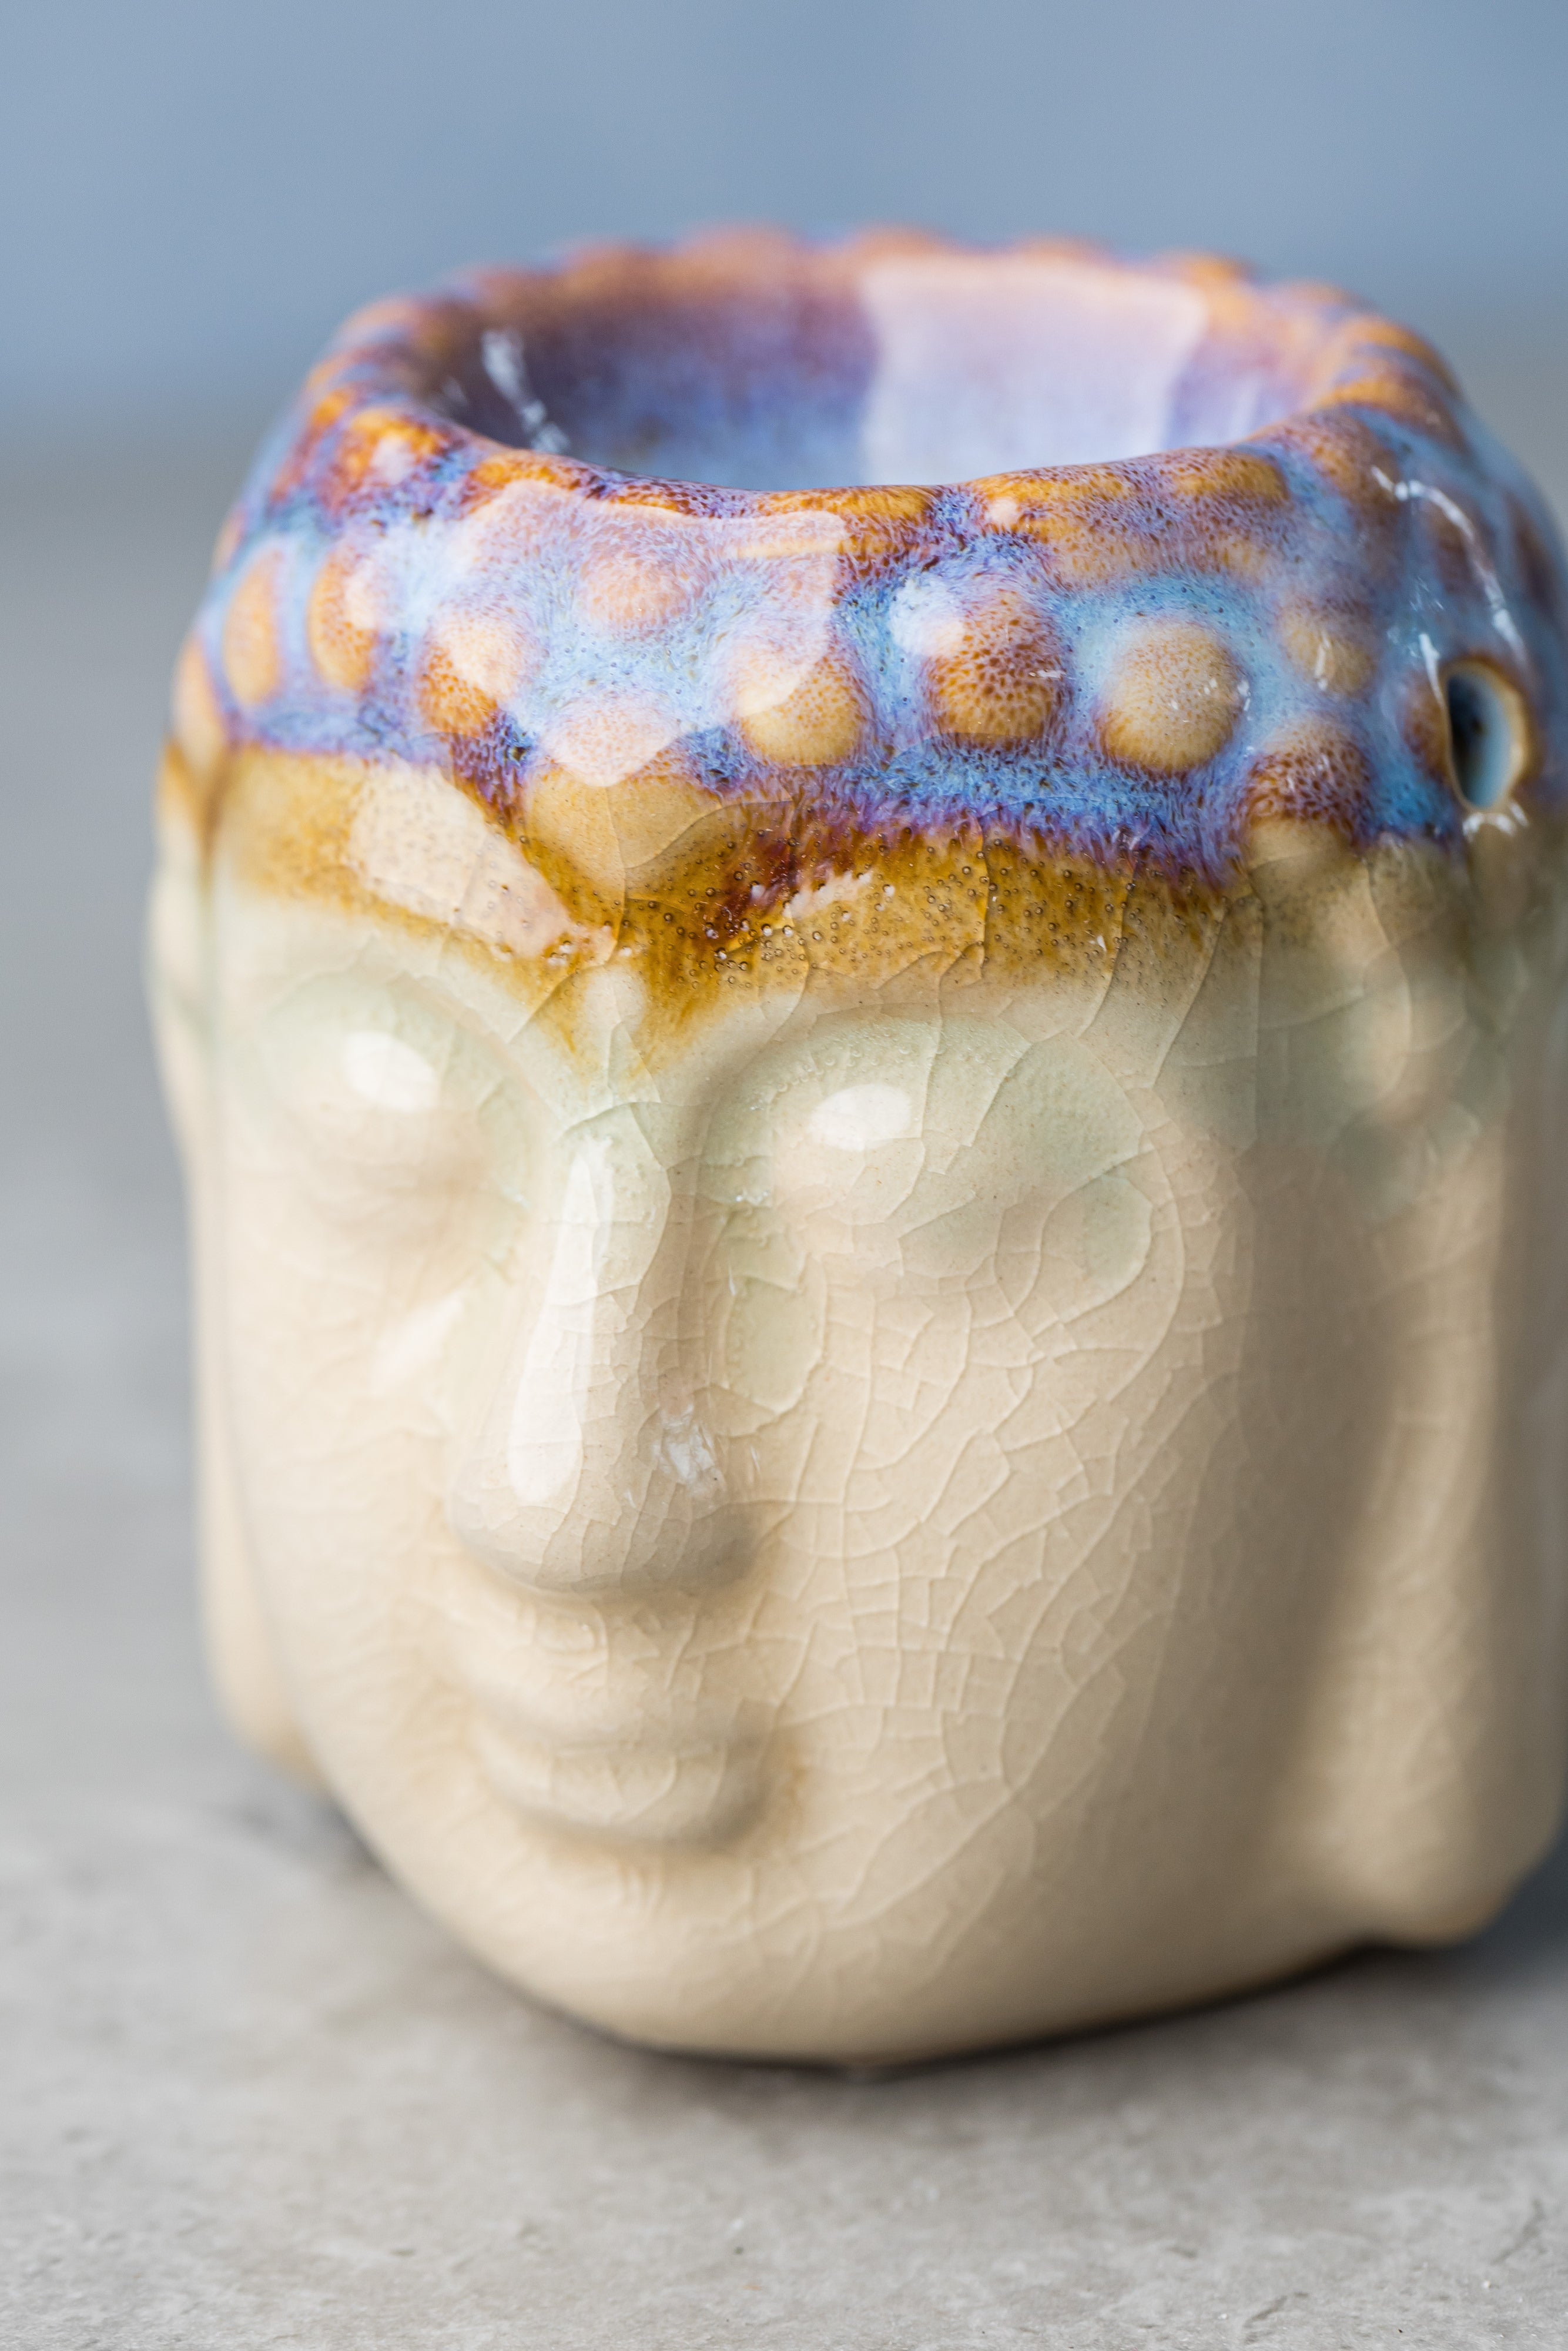 Buddha Head Ceramic Aromatherapy Oil Burner - Elegant Diffuser for Essential Oils & Relaxation - Everyday Rocks